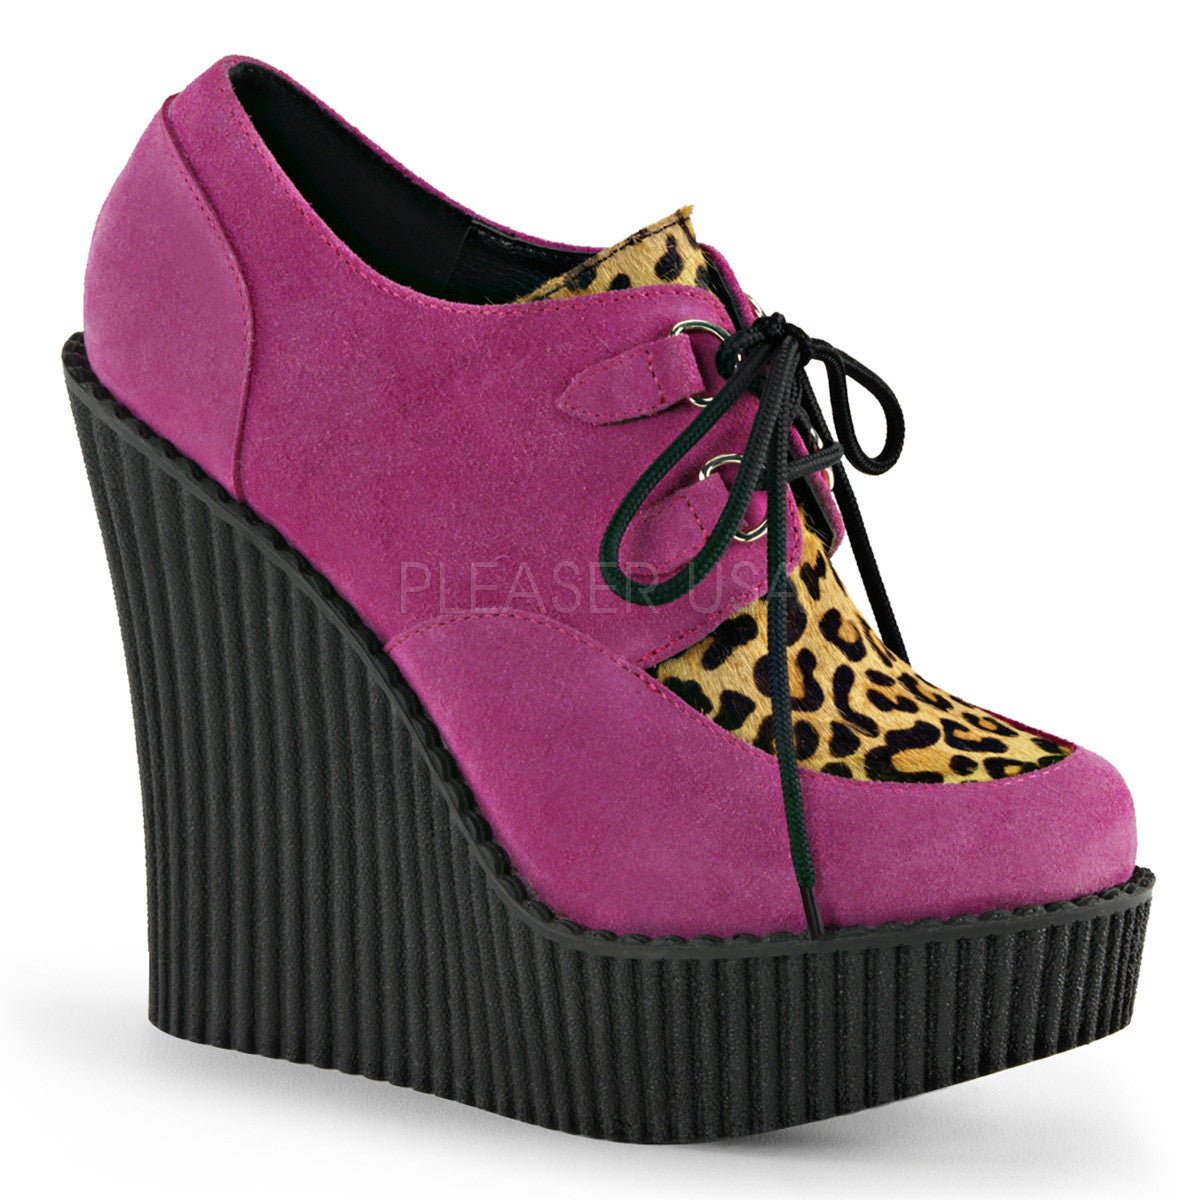 Demonia,Demonia CREEPER-304 Hot Pink Vegan Suede-Leopard Printed Pony Hair Creepers - Shoecup.com